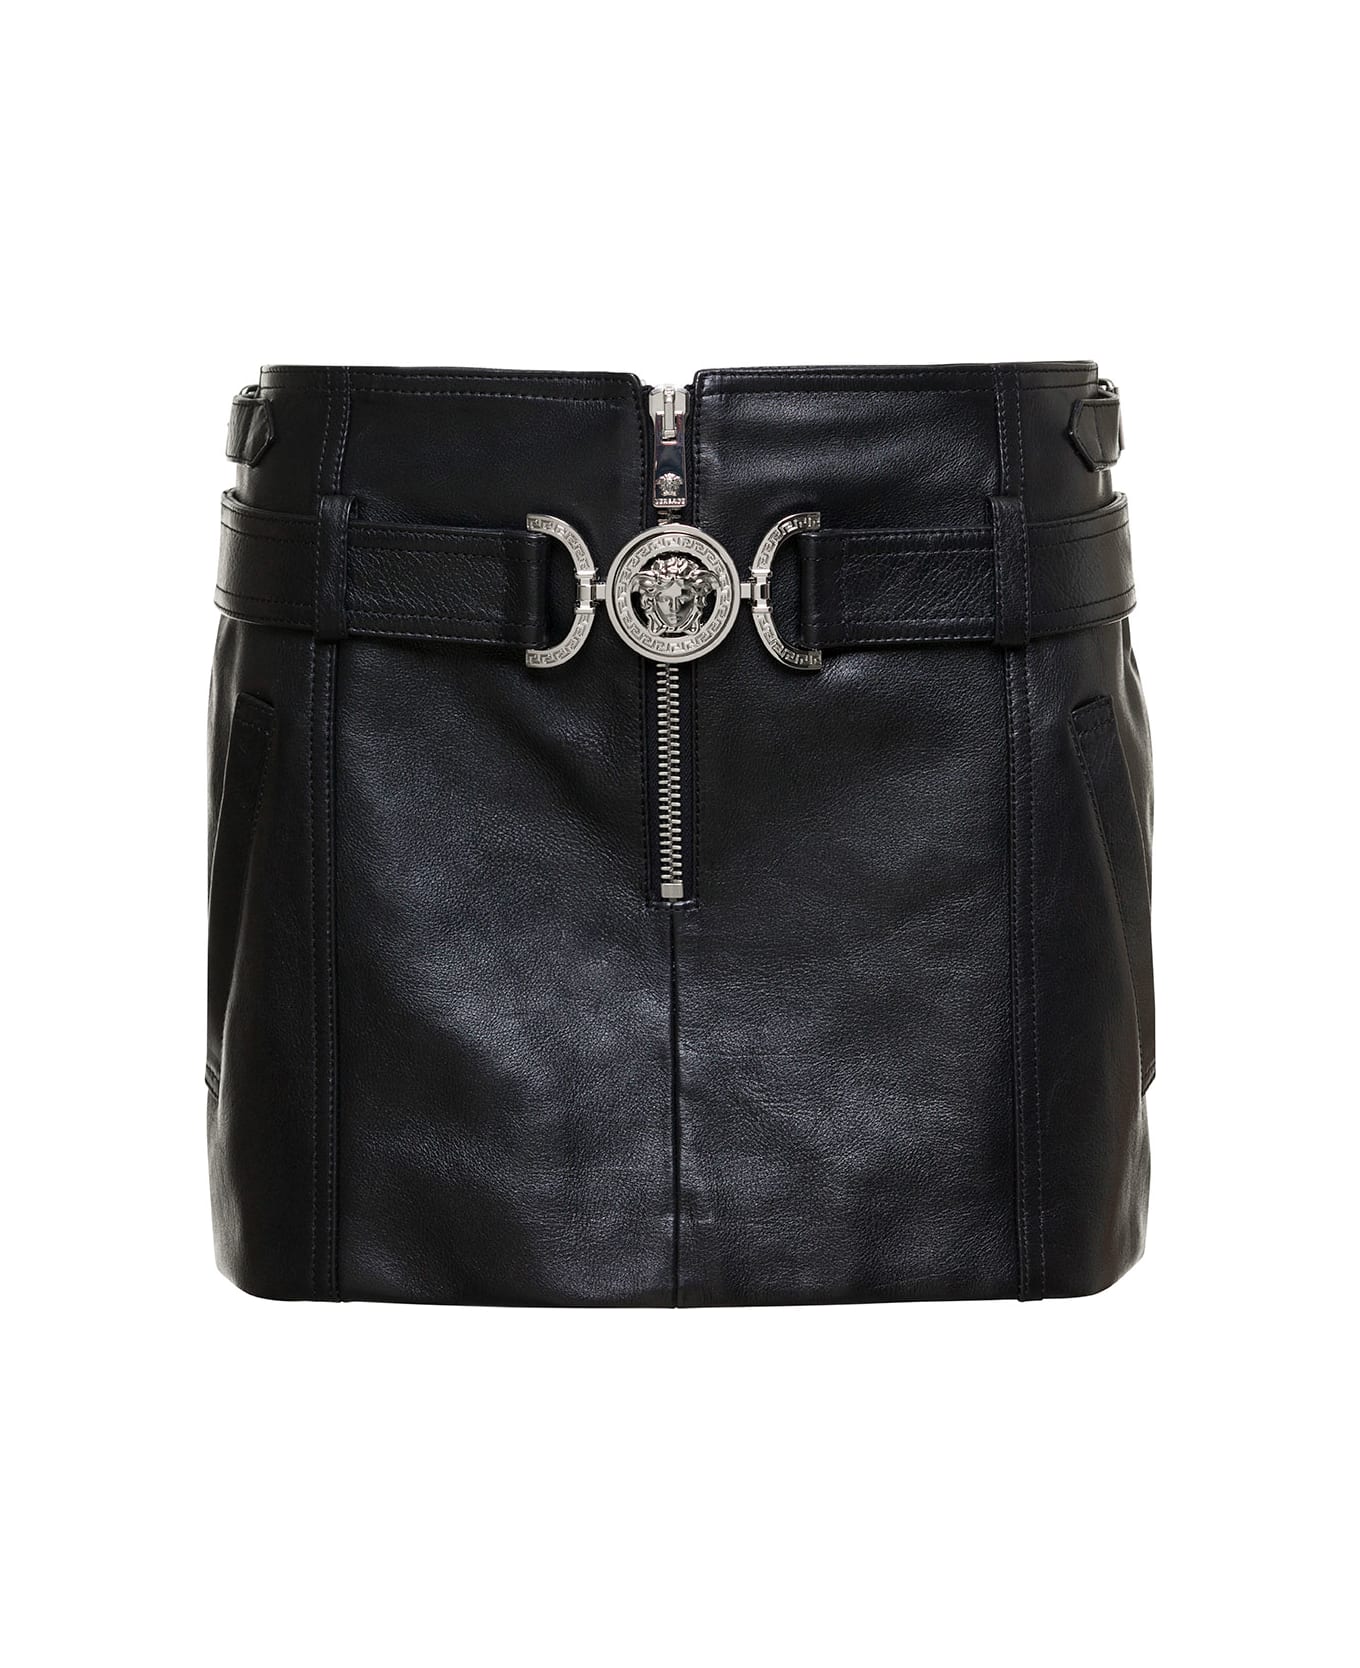 Versace Black Miniskirt With Belt And Medusa Team In Calf Woman - Black